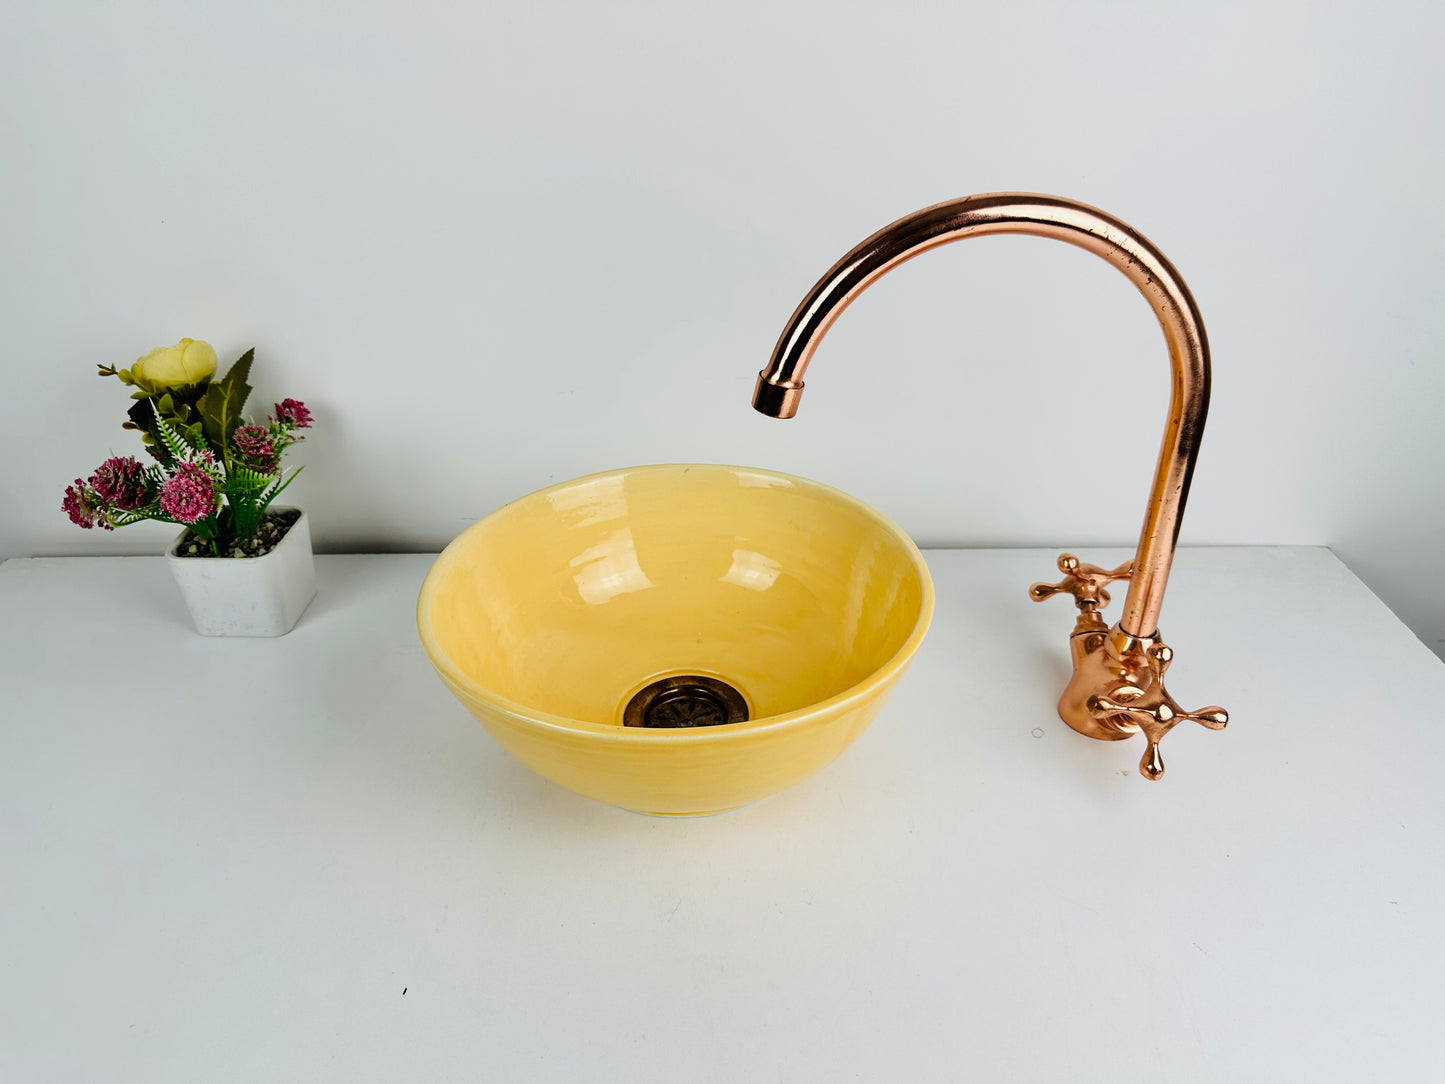 Golden Mustard: Handcrafted Ceramic Sink in Mustard Yellow Hue